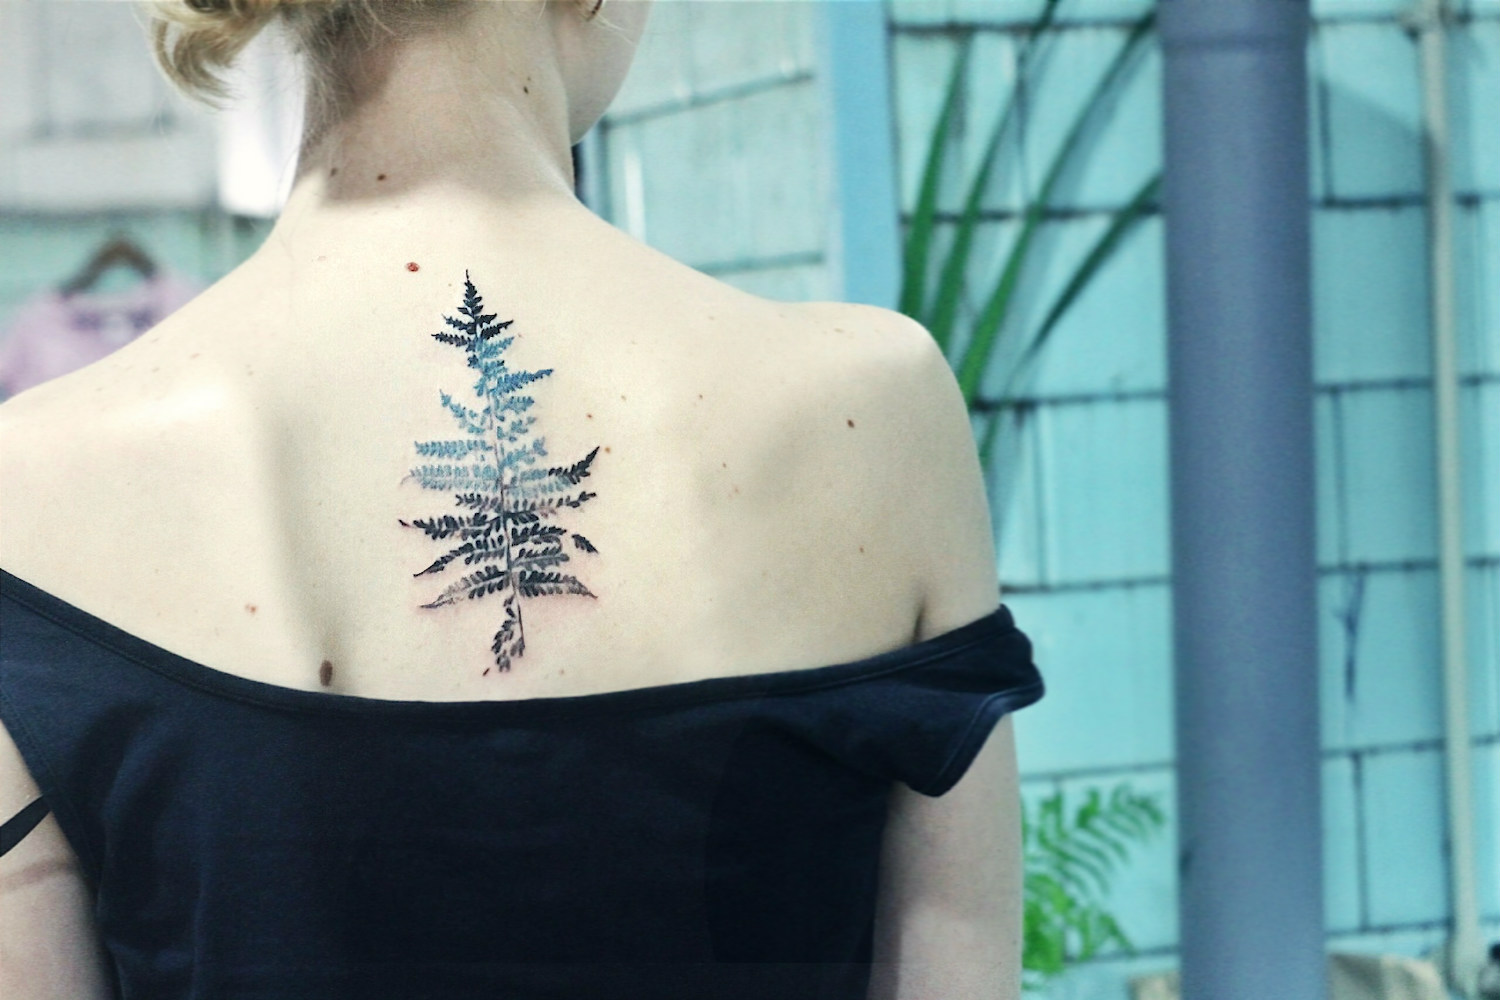 Live leaf tattoo by Rit Kit